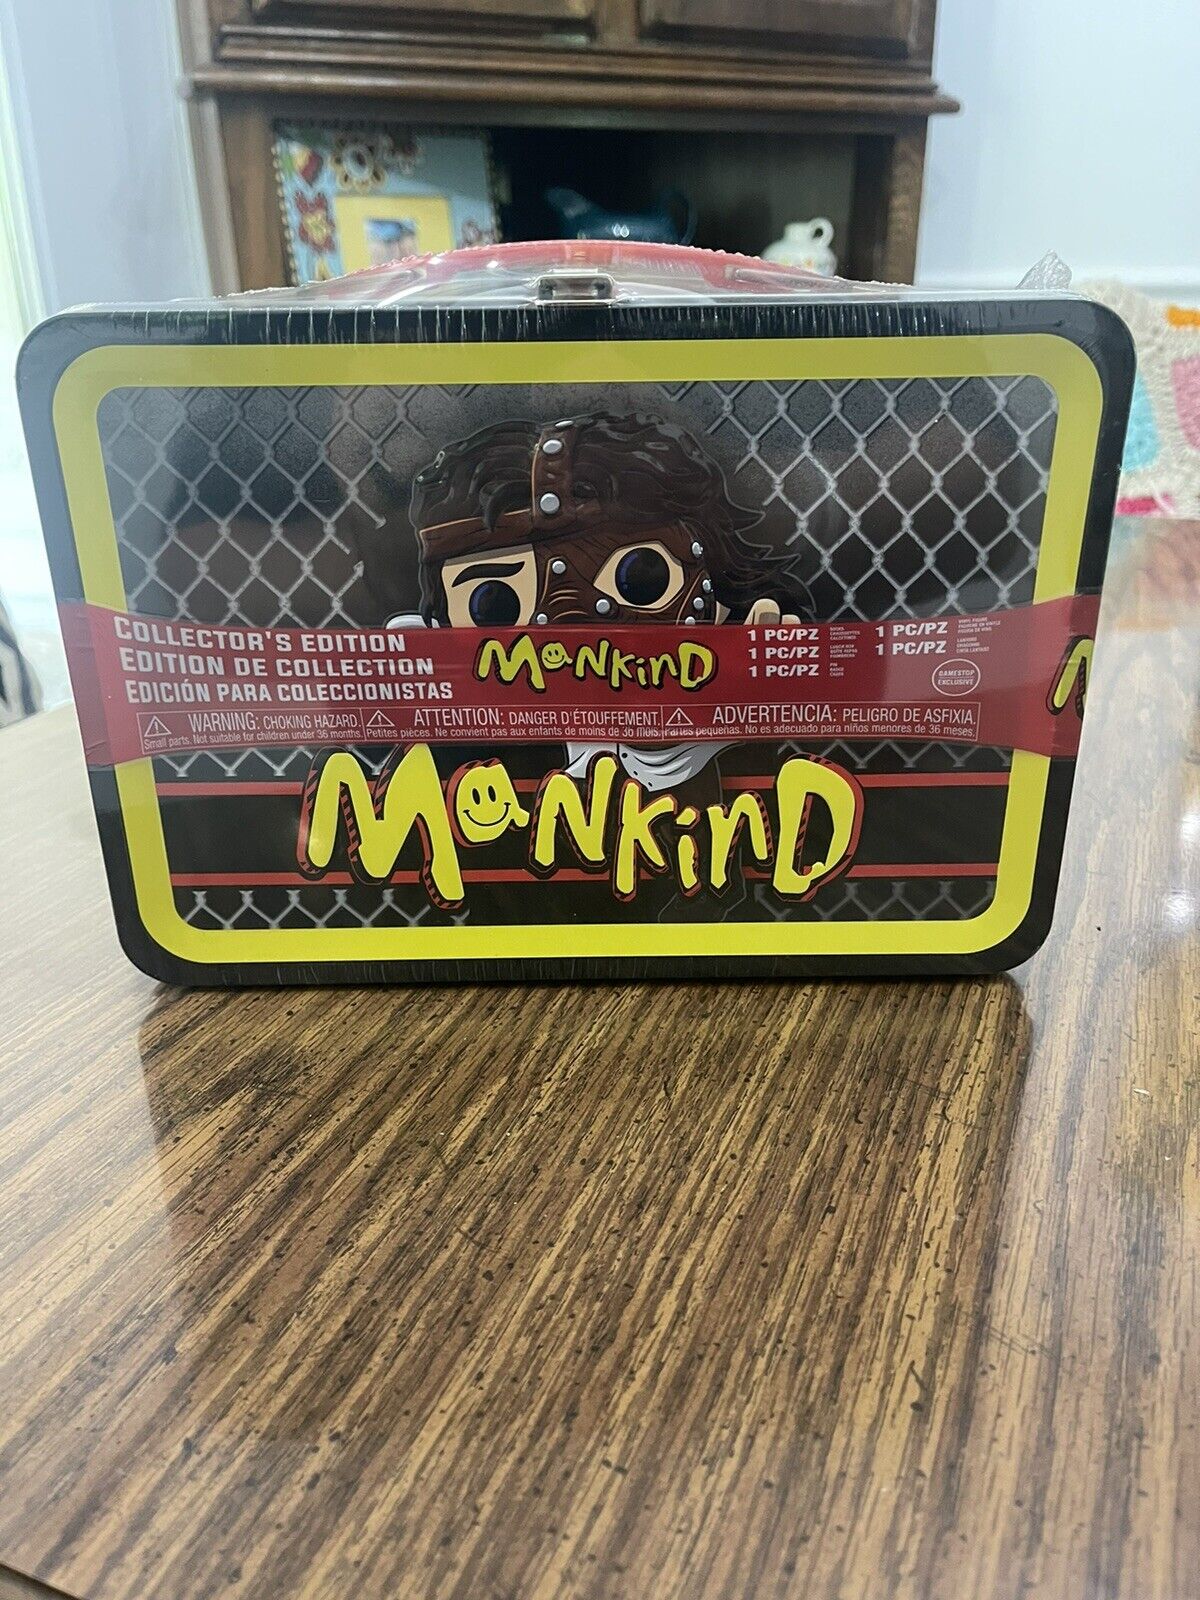 Funko Pop WWE Mankind Lunchbox GameStop Exclusive With Mr. Socko Mick Foley